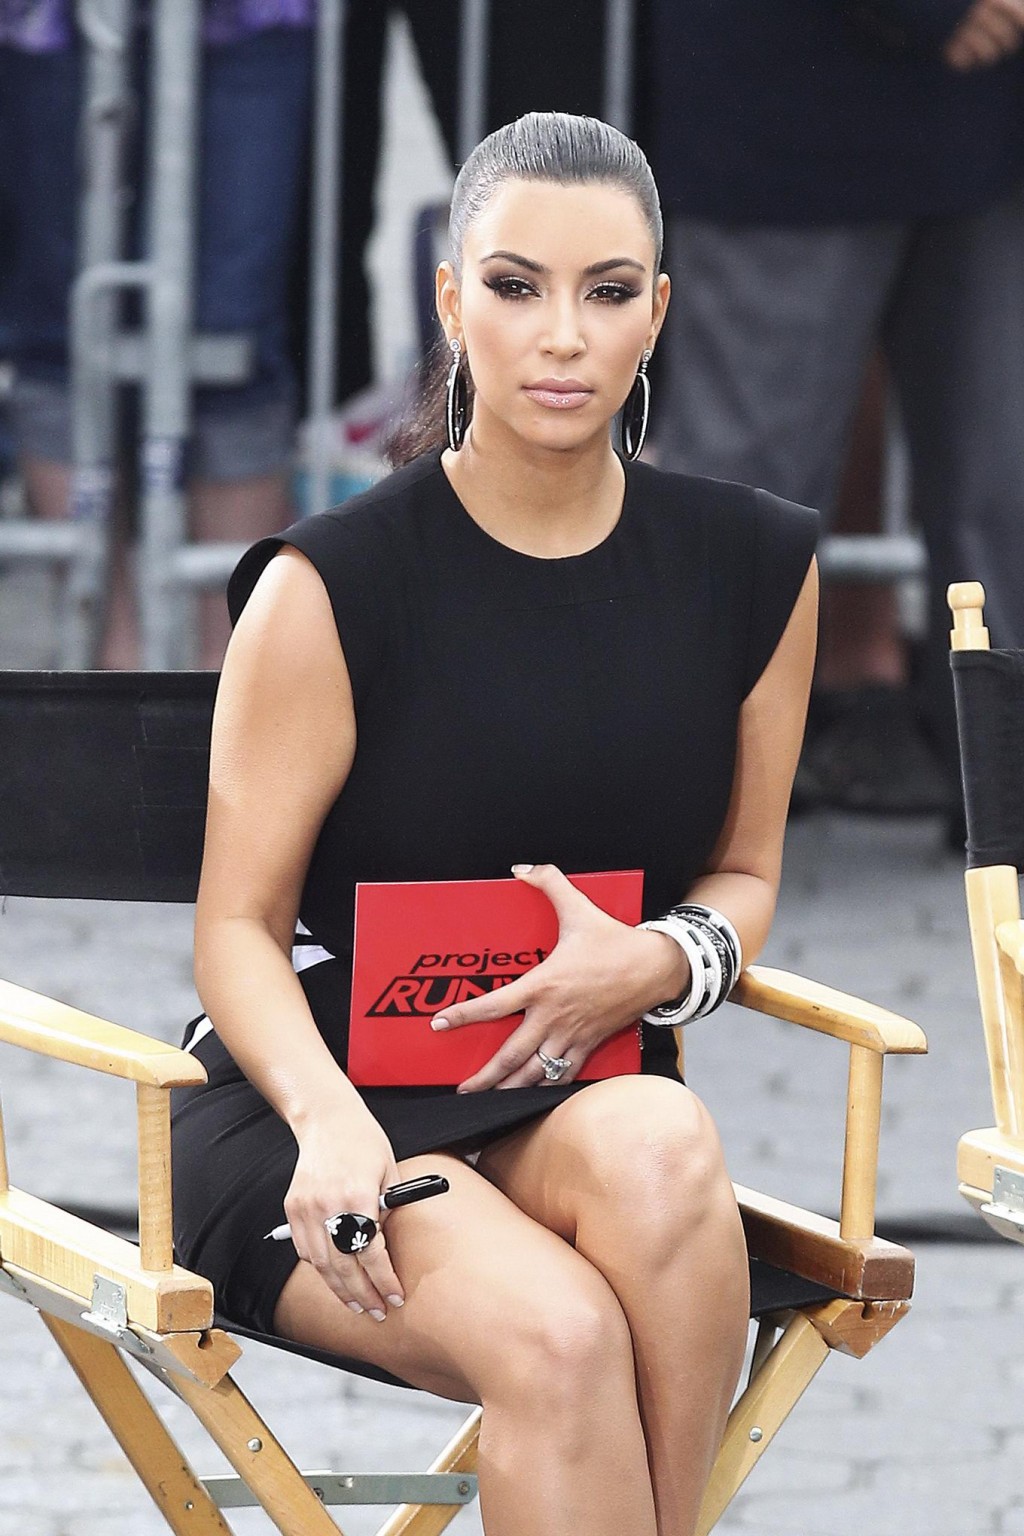 Kim Kardashian upskirt on the set of Project Runway in NYC #75298531